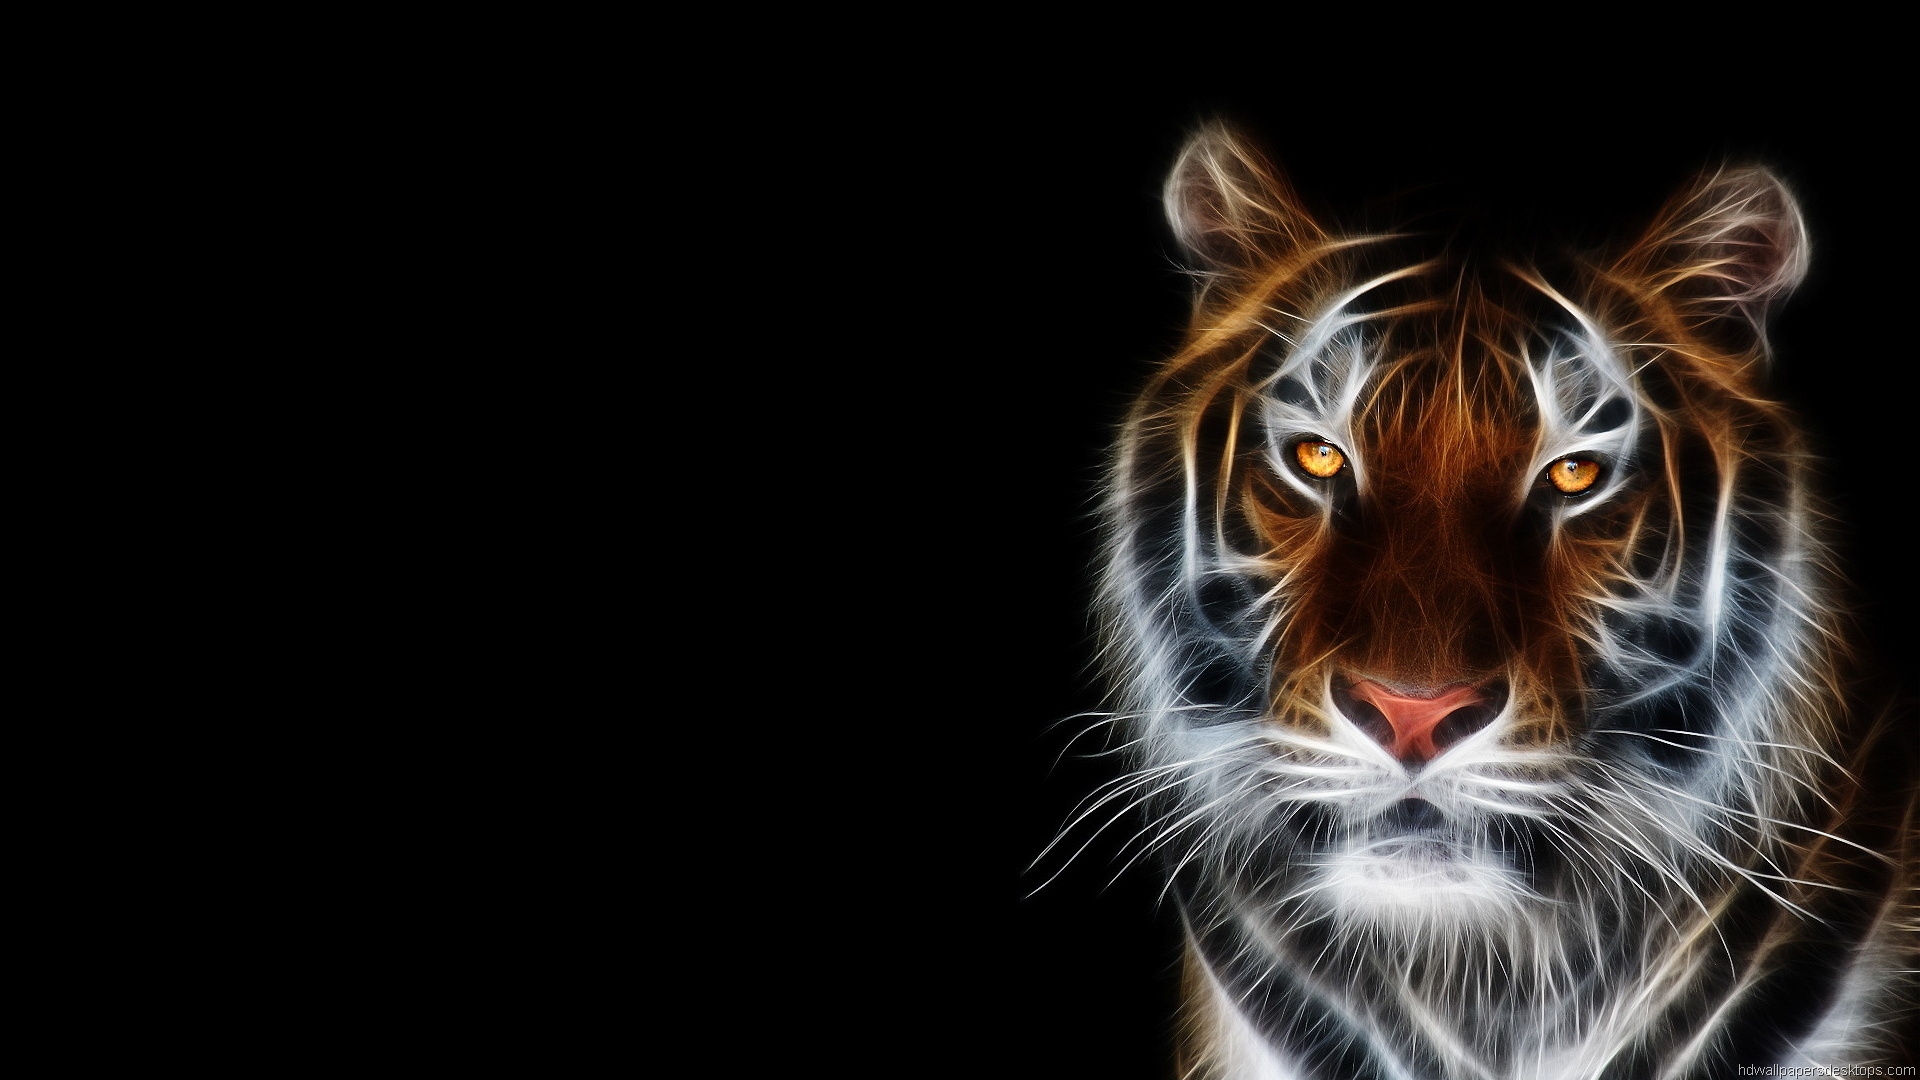 Animals Widescreen Desktop Backgrounds Photos Wallpapers